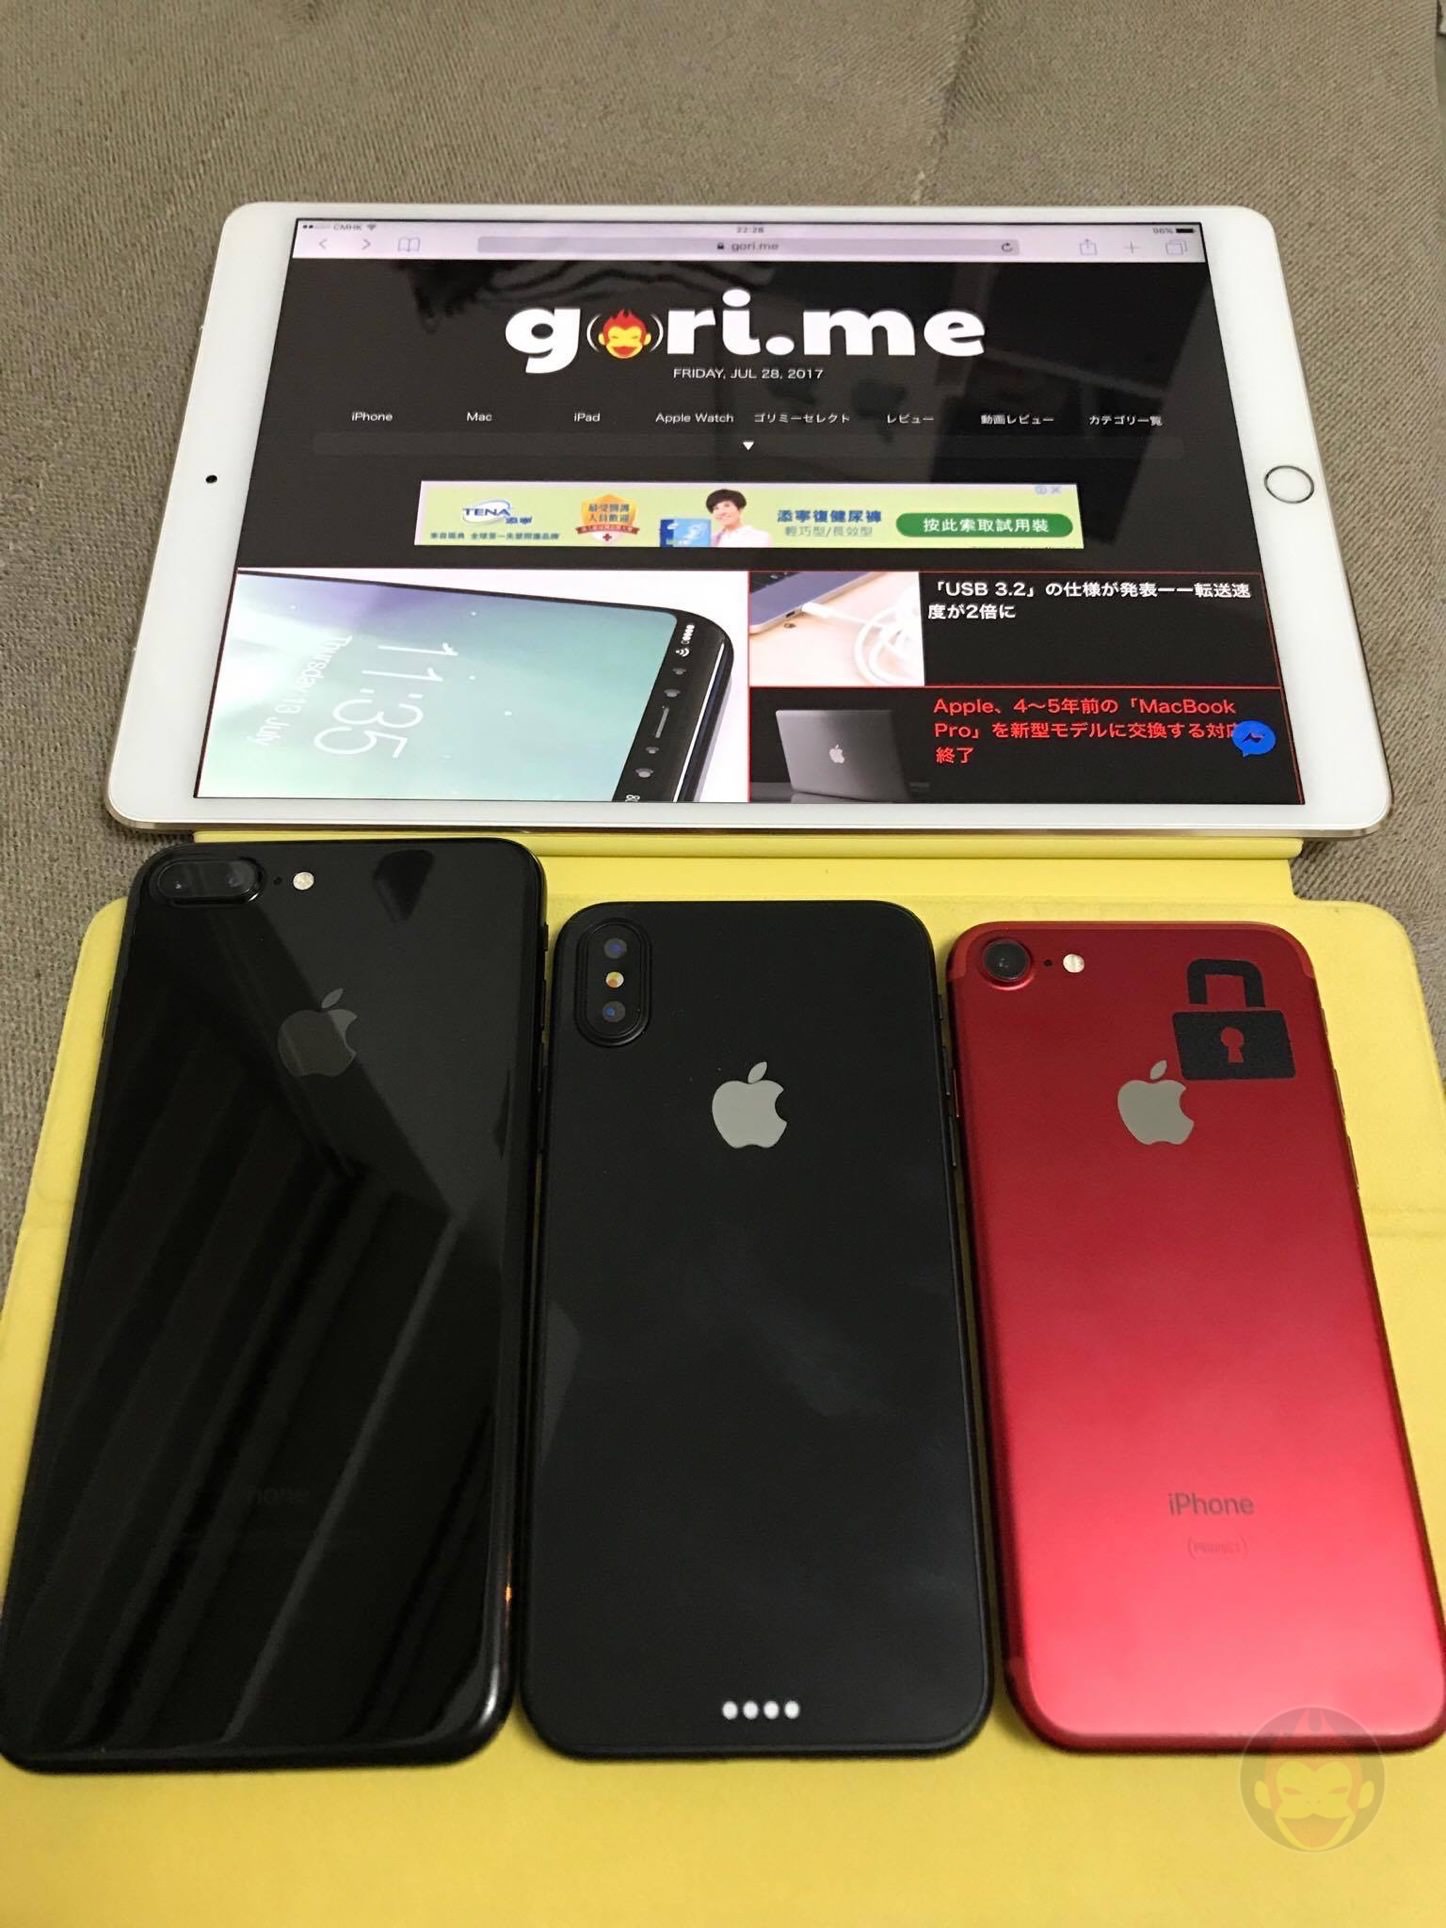 iPhone-Pro-8-Edition-Mockup-GoriMe-11.jpg